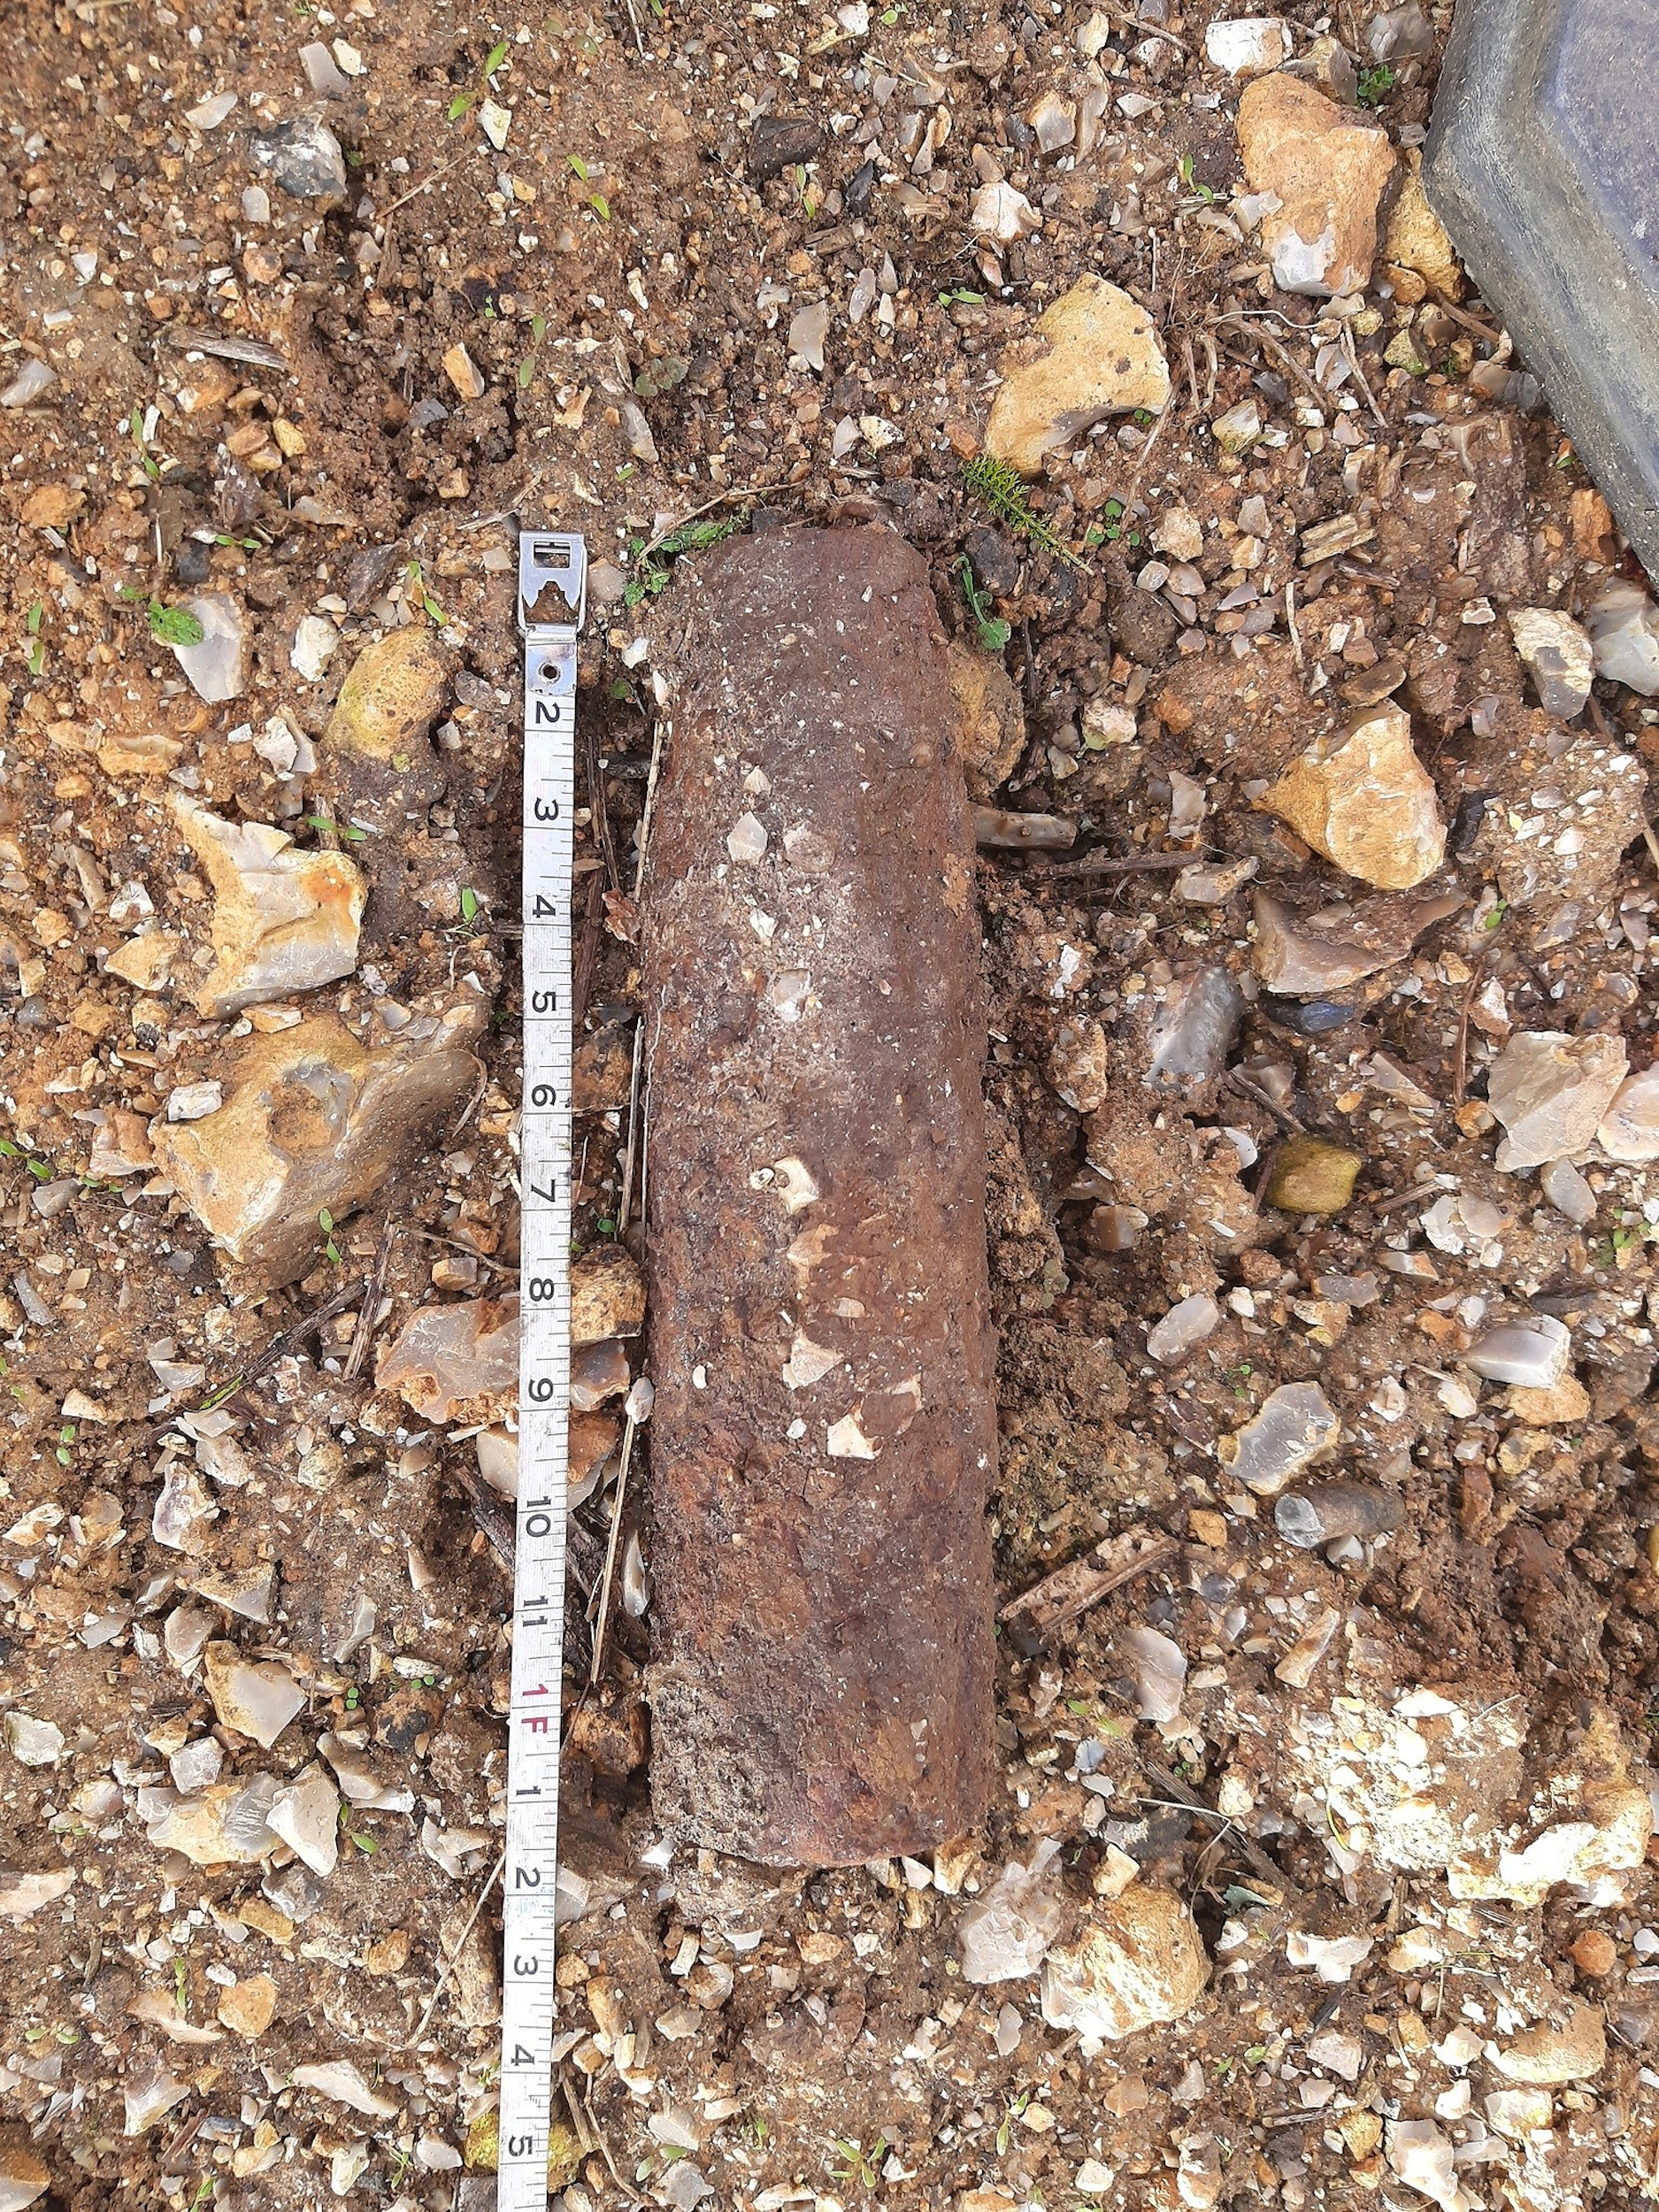 Unexploded WW2 bomb - Environmental News